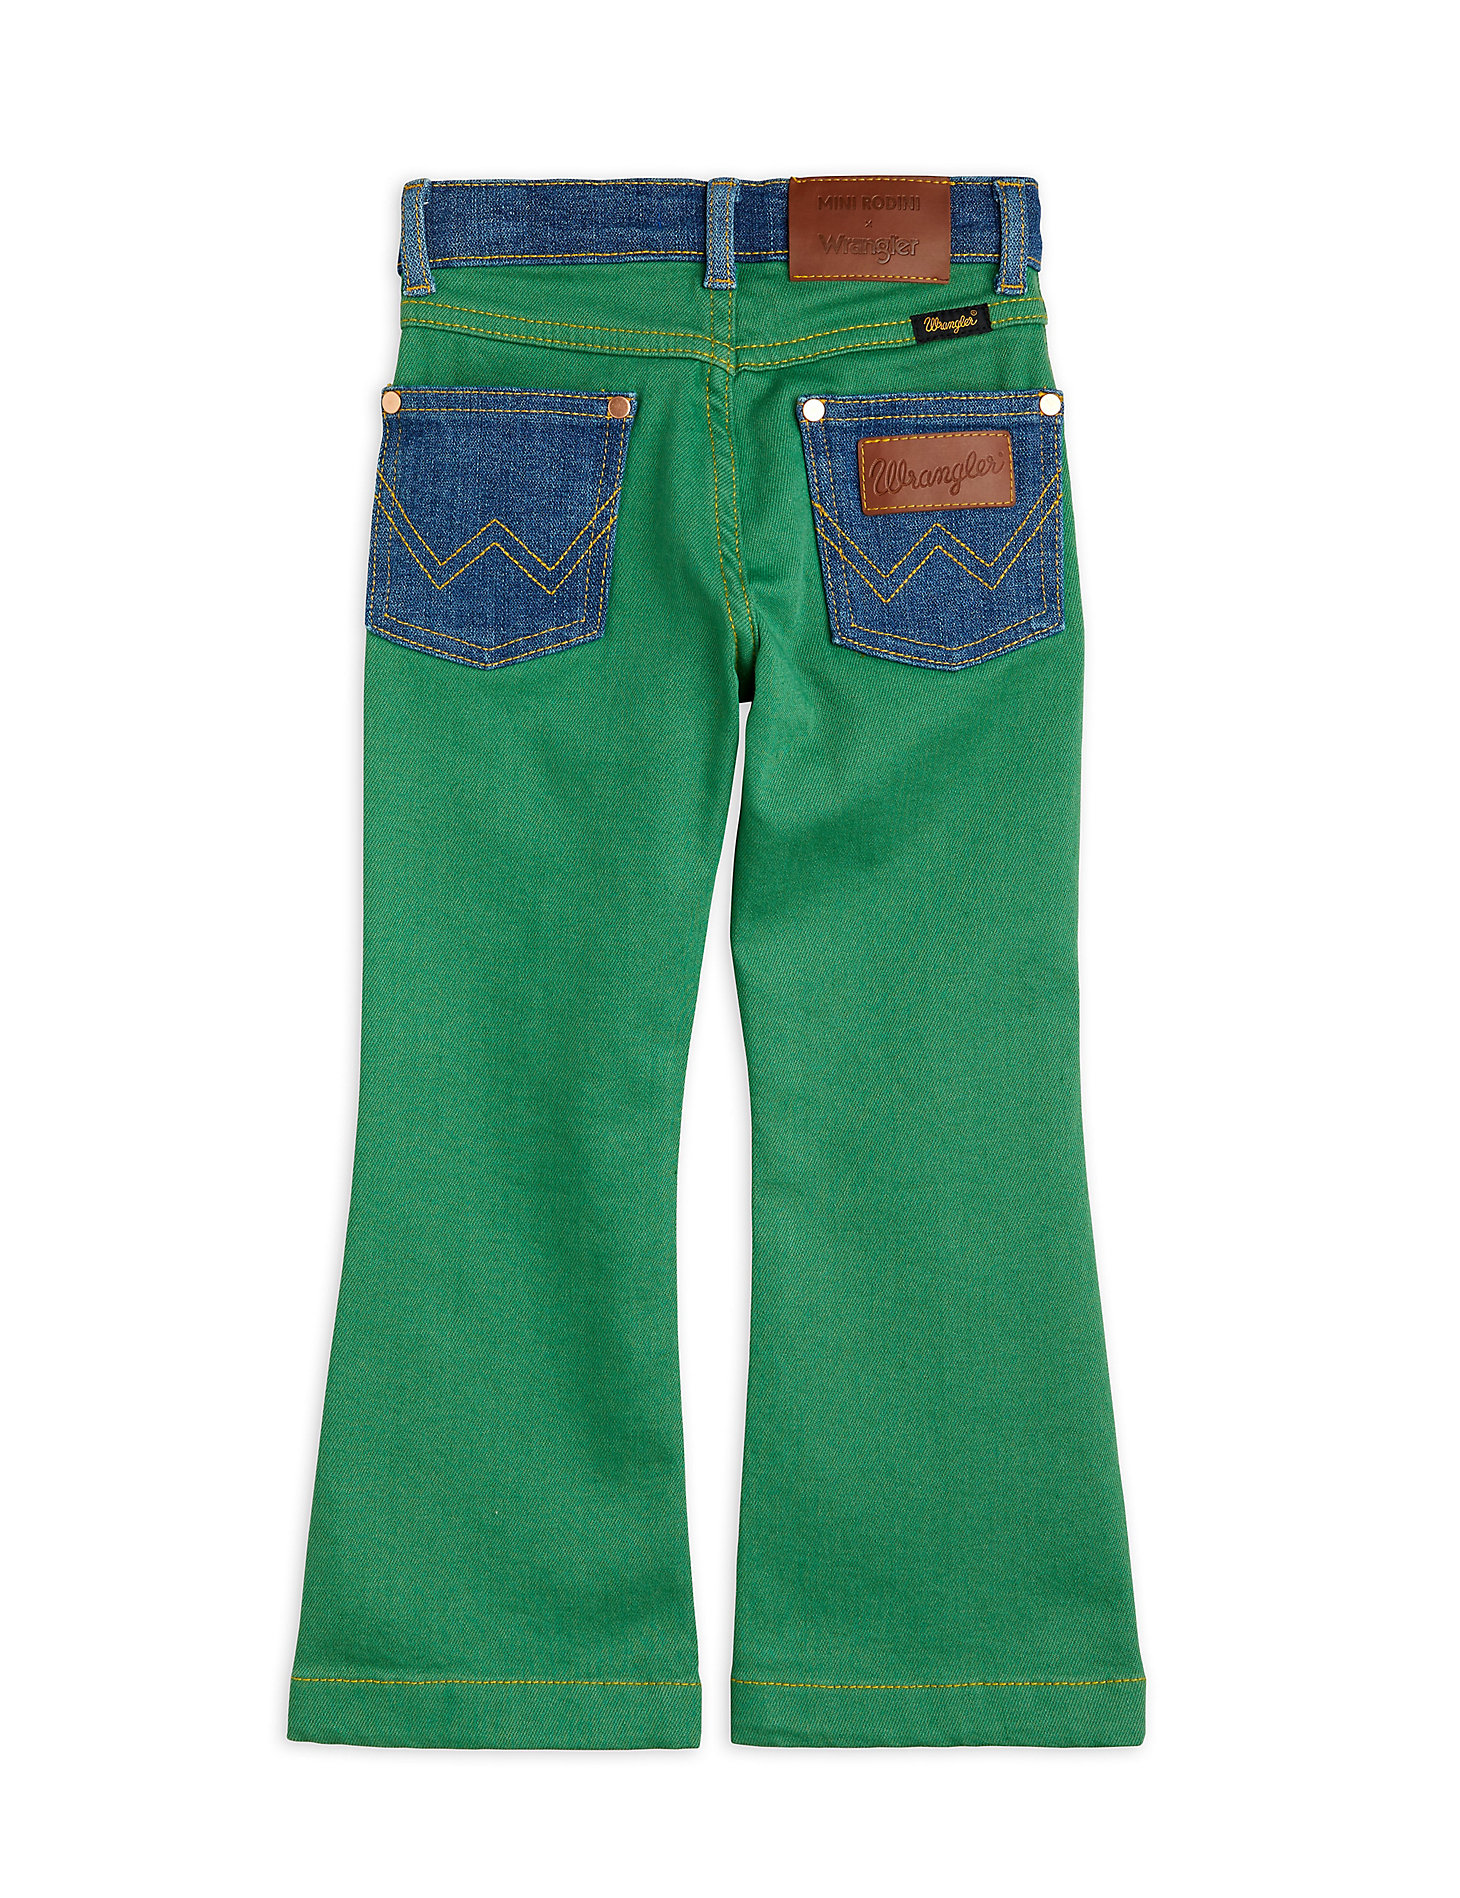 Mini Rodini x Wrangler Two-Tone Flared Jeans in Green alternative view 2